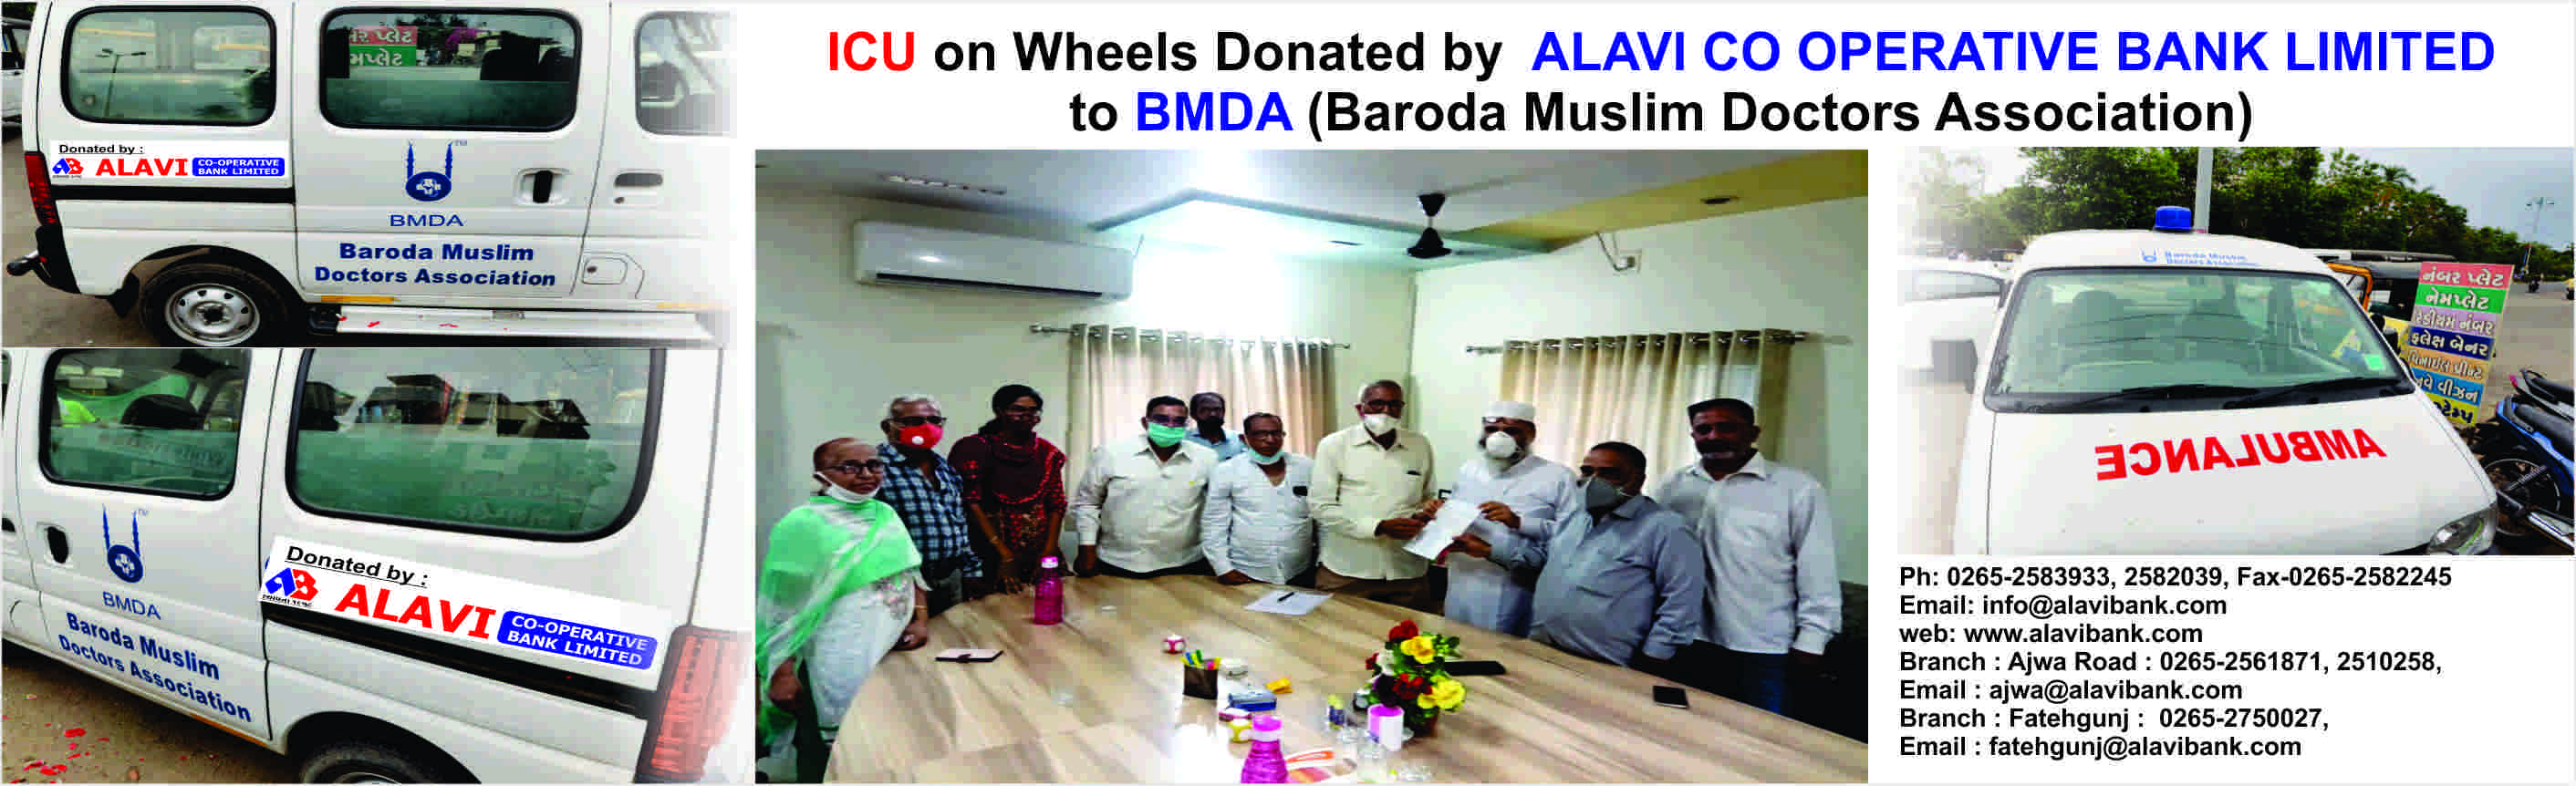 donation-to-bmda